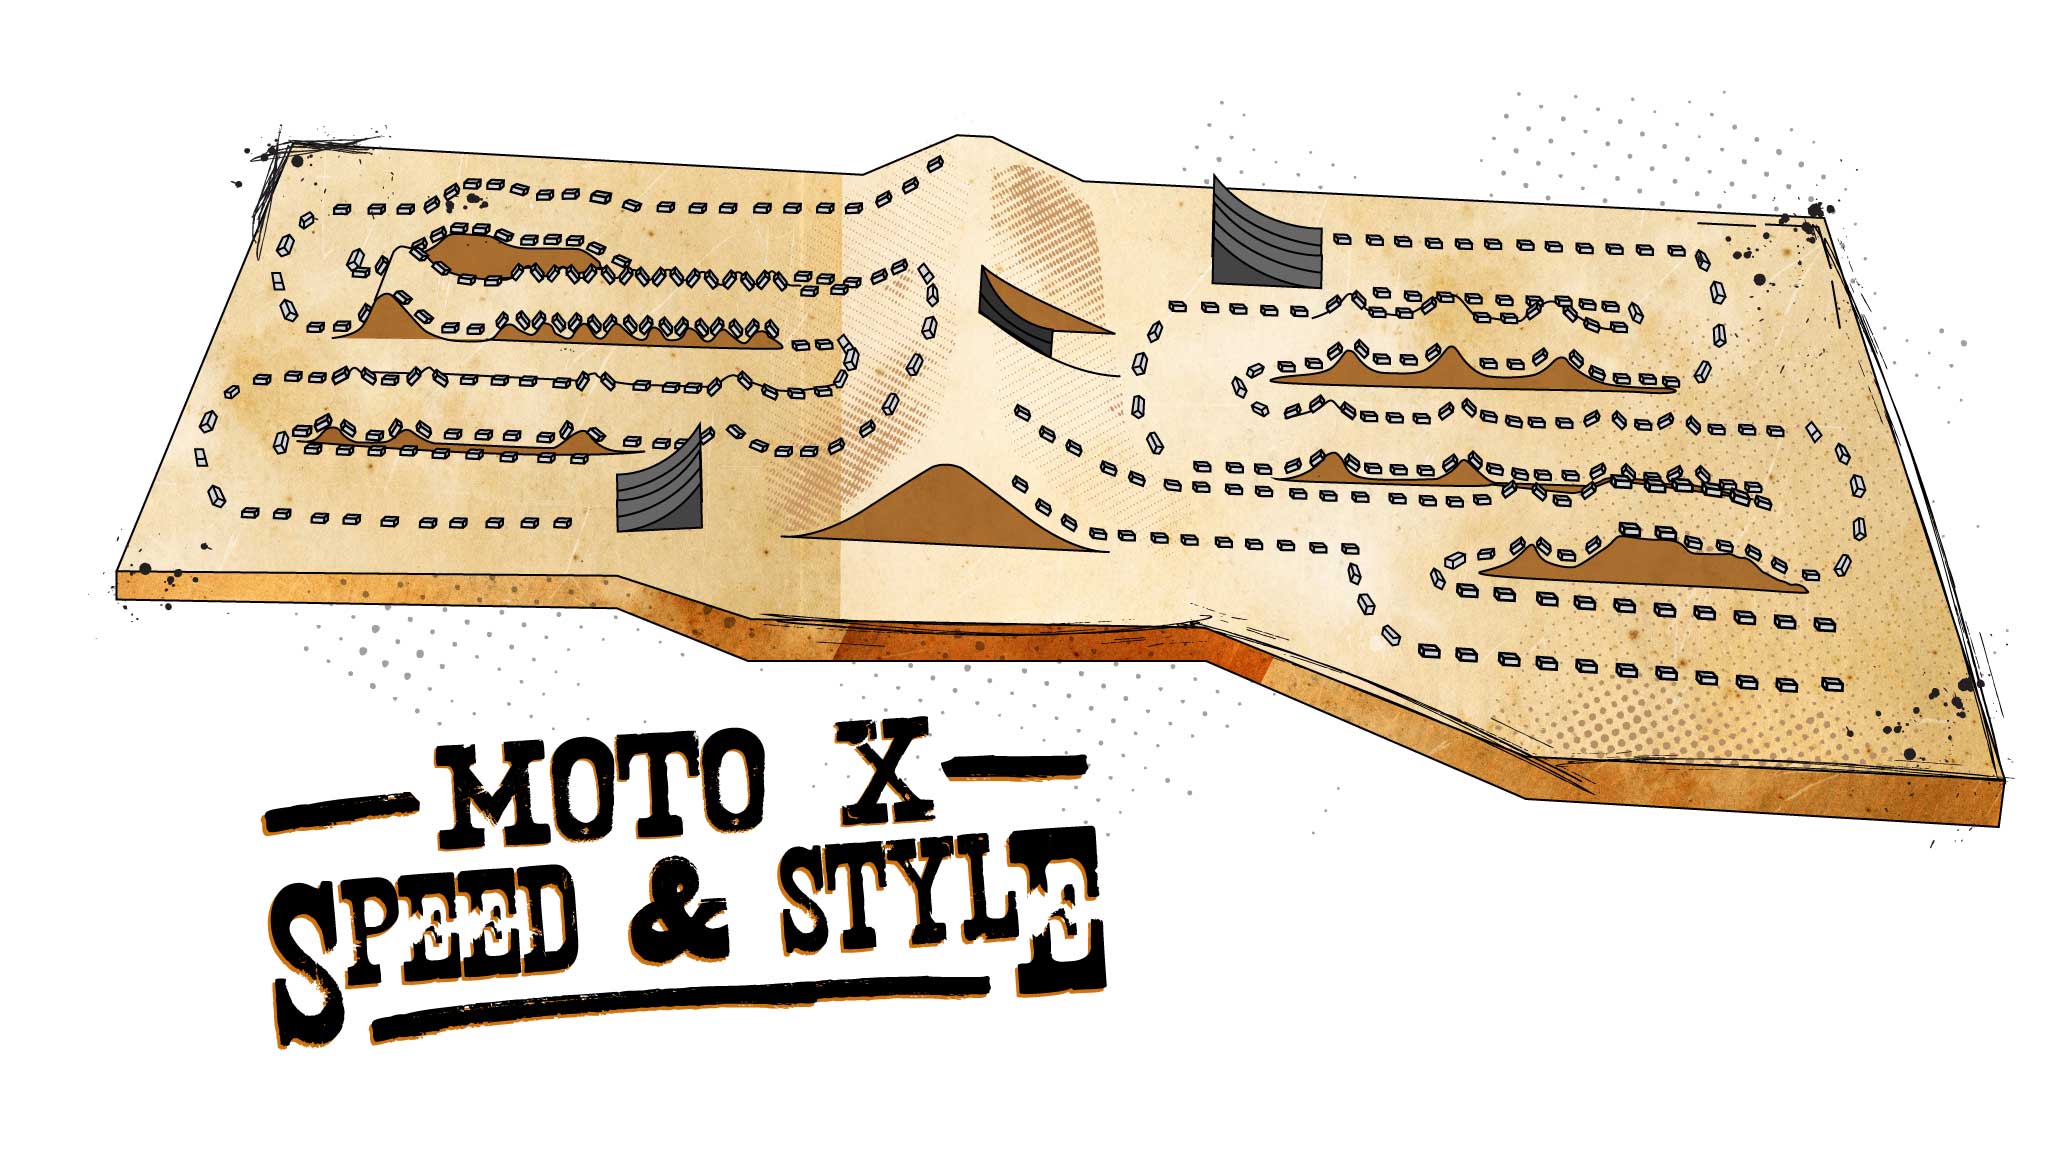 Moto X Speed & Style